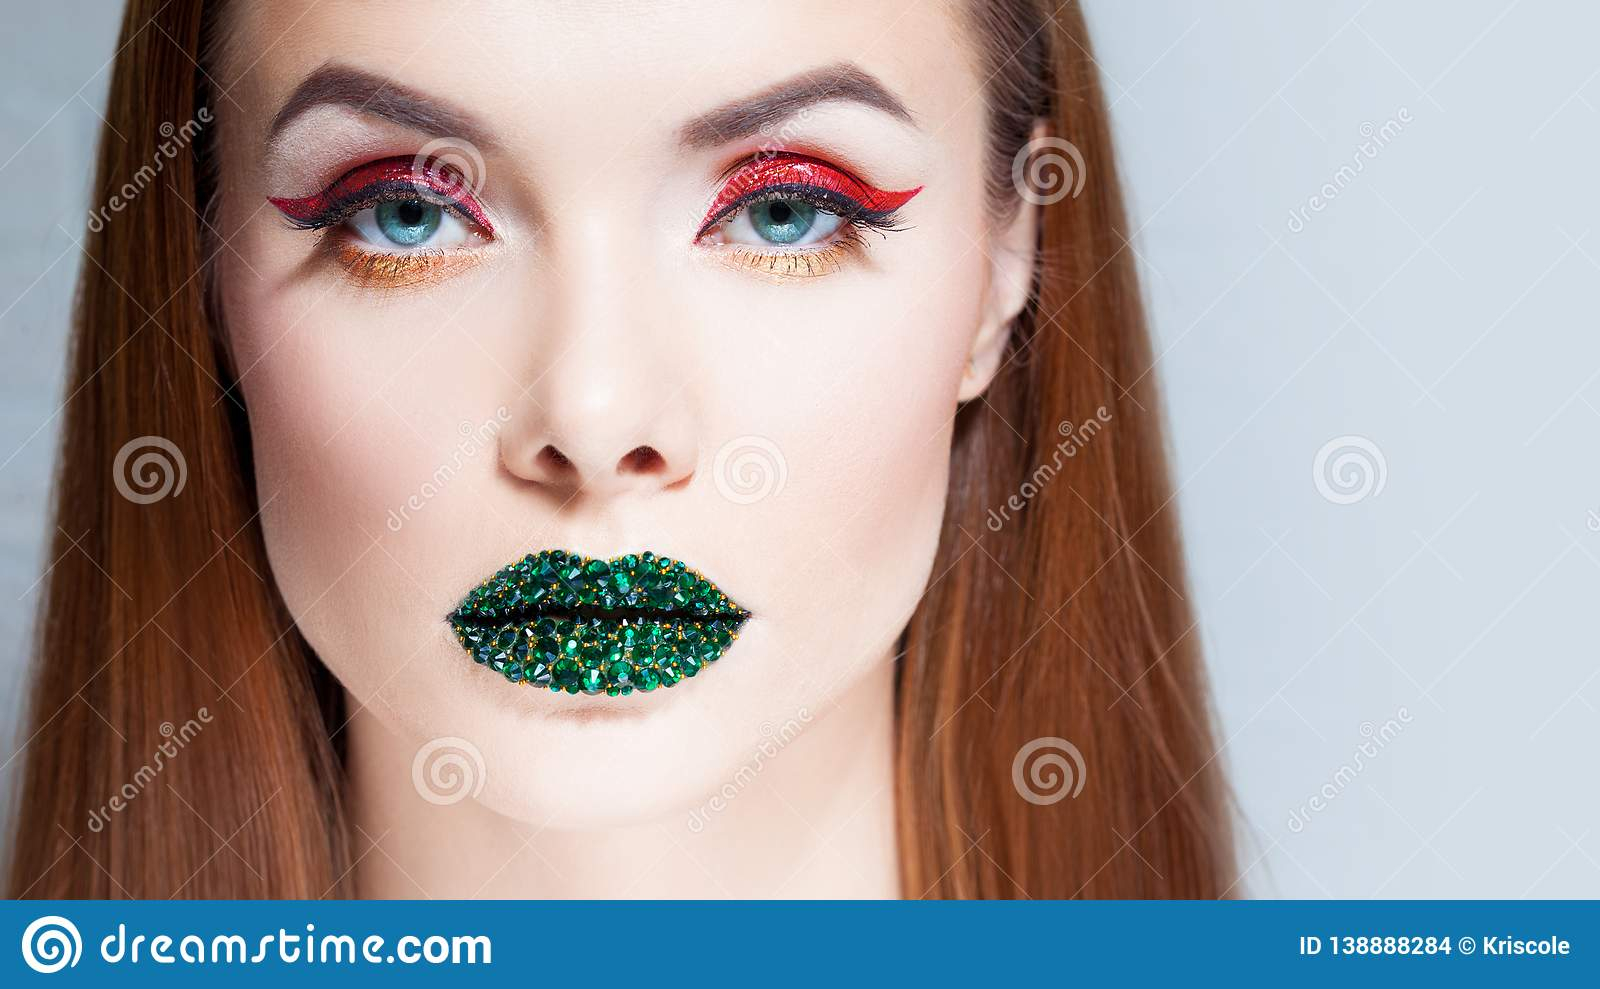 Rhinestones For Eyes Makeup Bright Eye Makeup And Green Lips In Rhinestones Unusual Look With